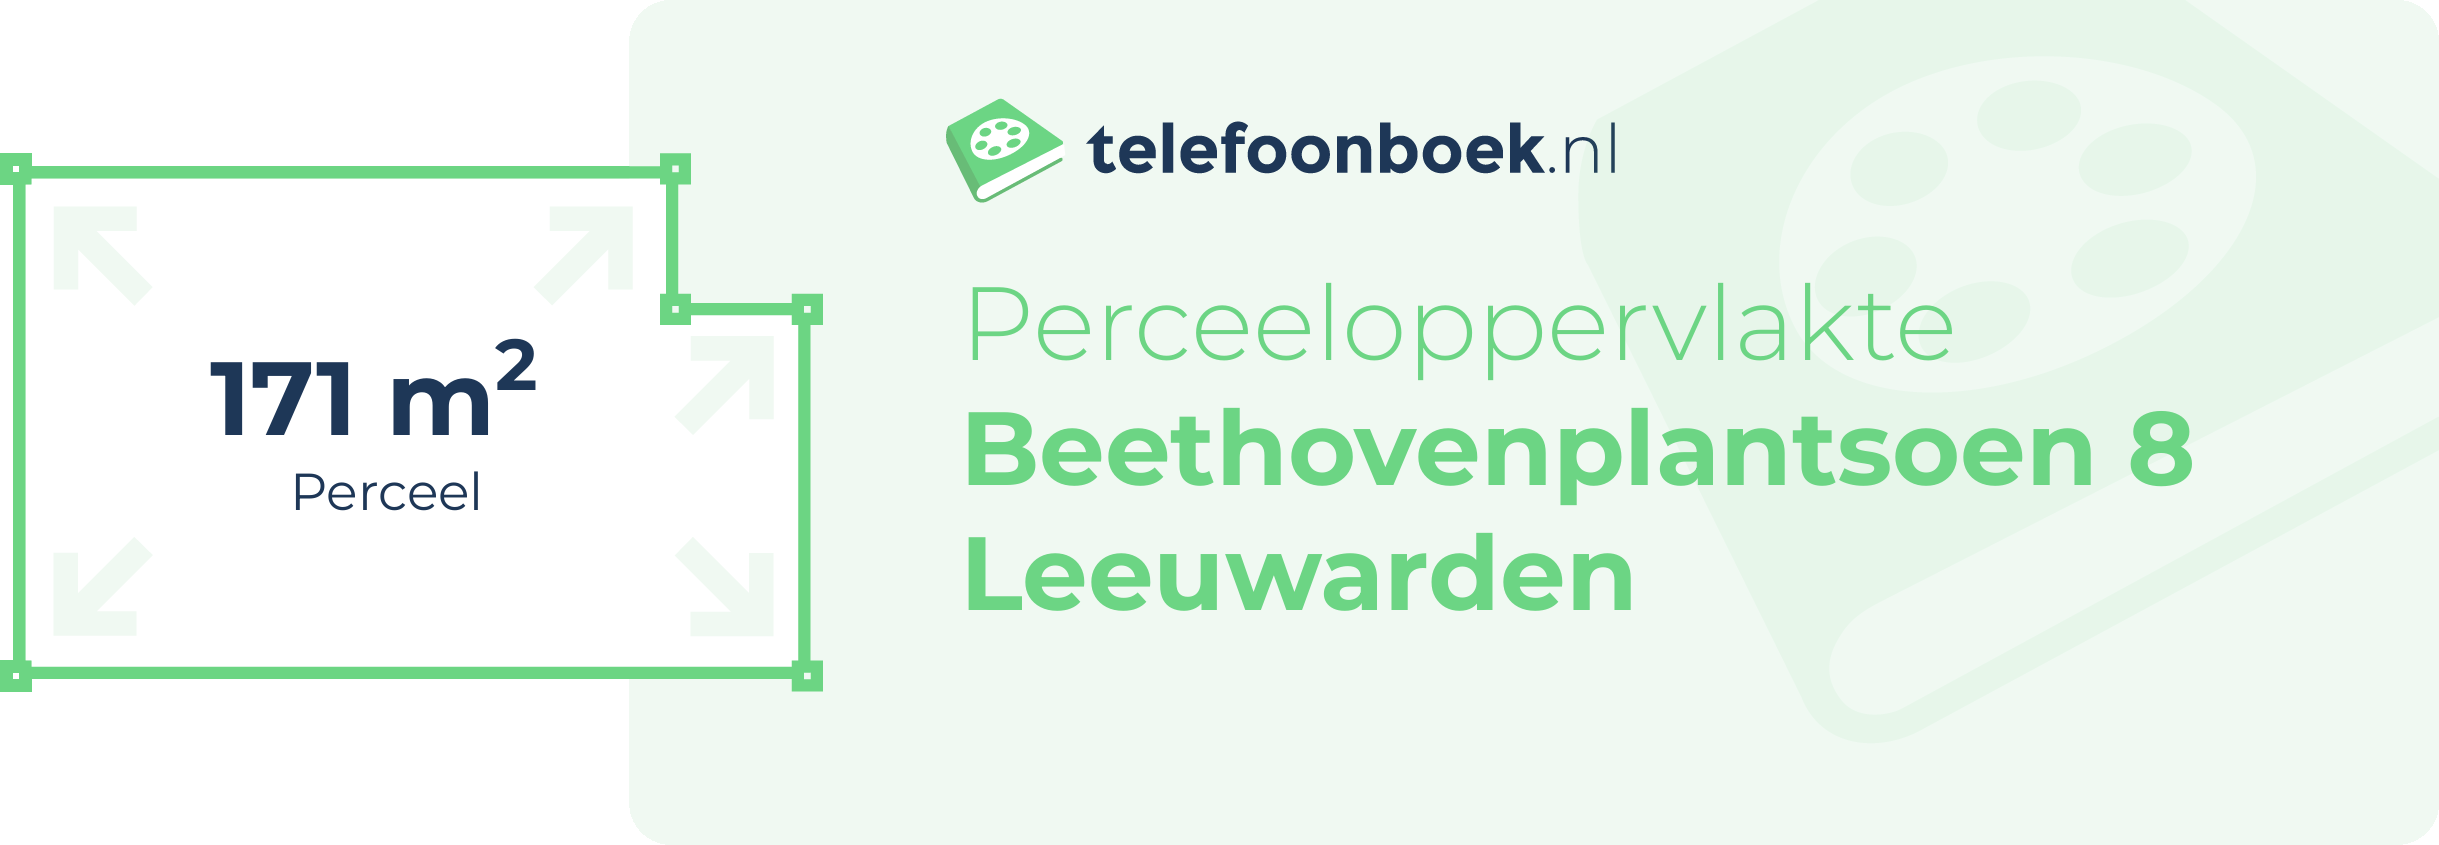 Perceeloppervlakte Beethovenplantsoen 8 Leeuwarden